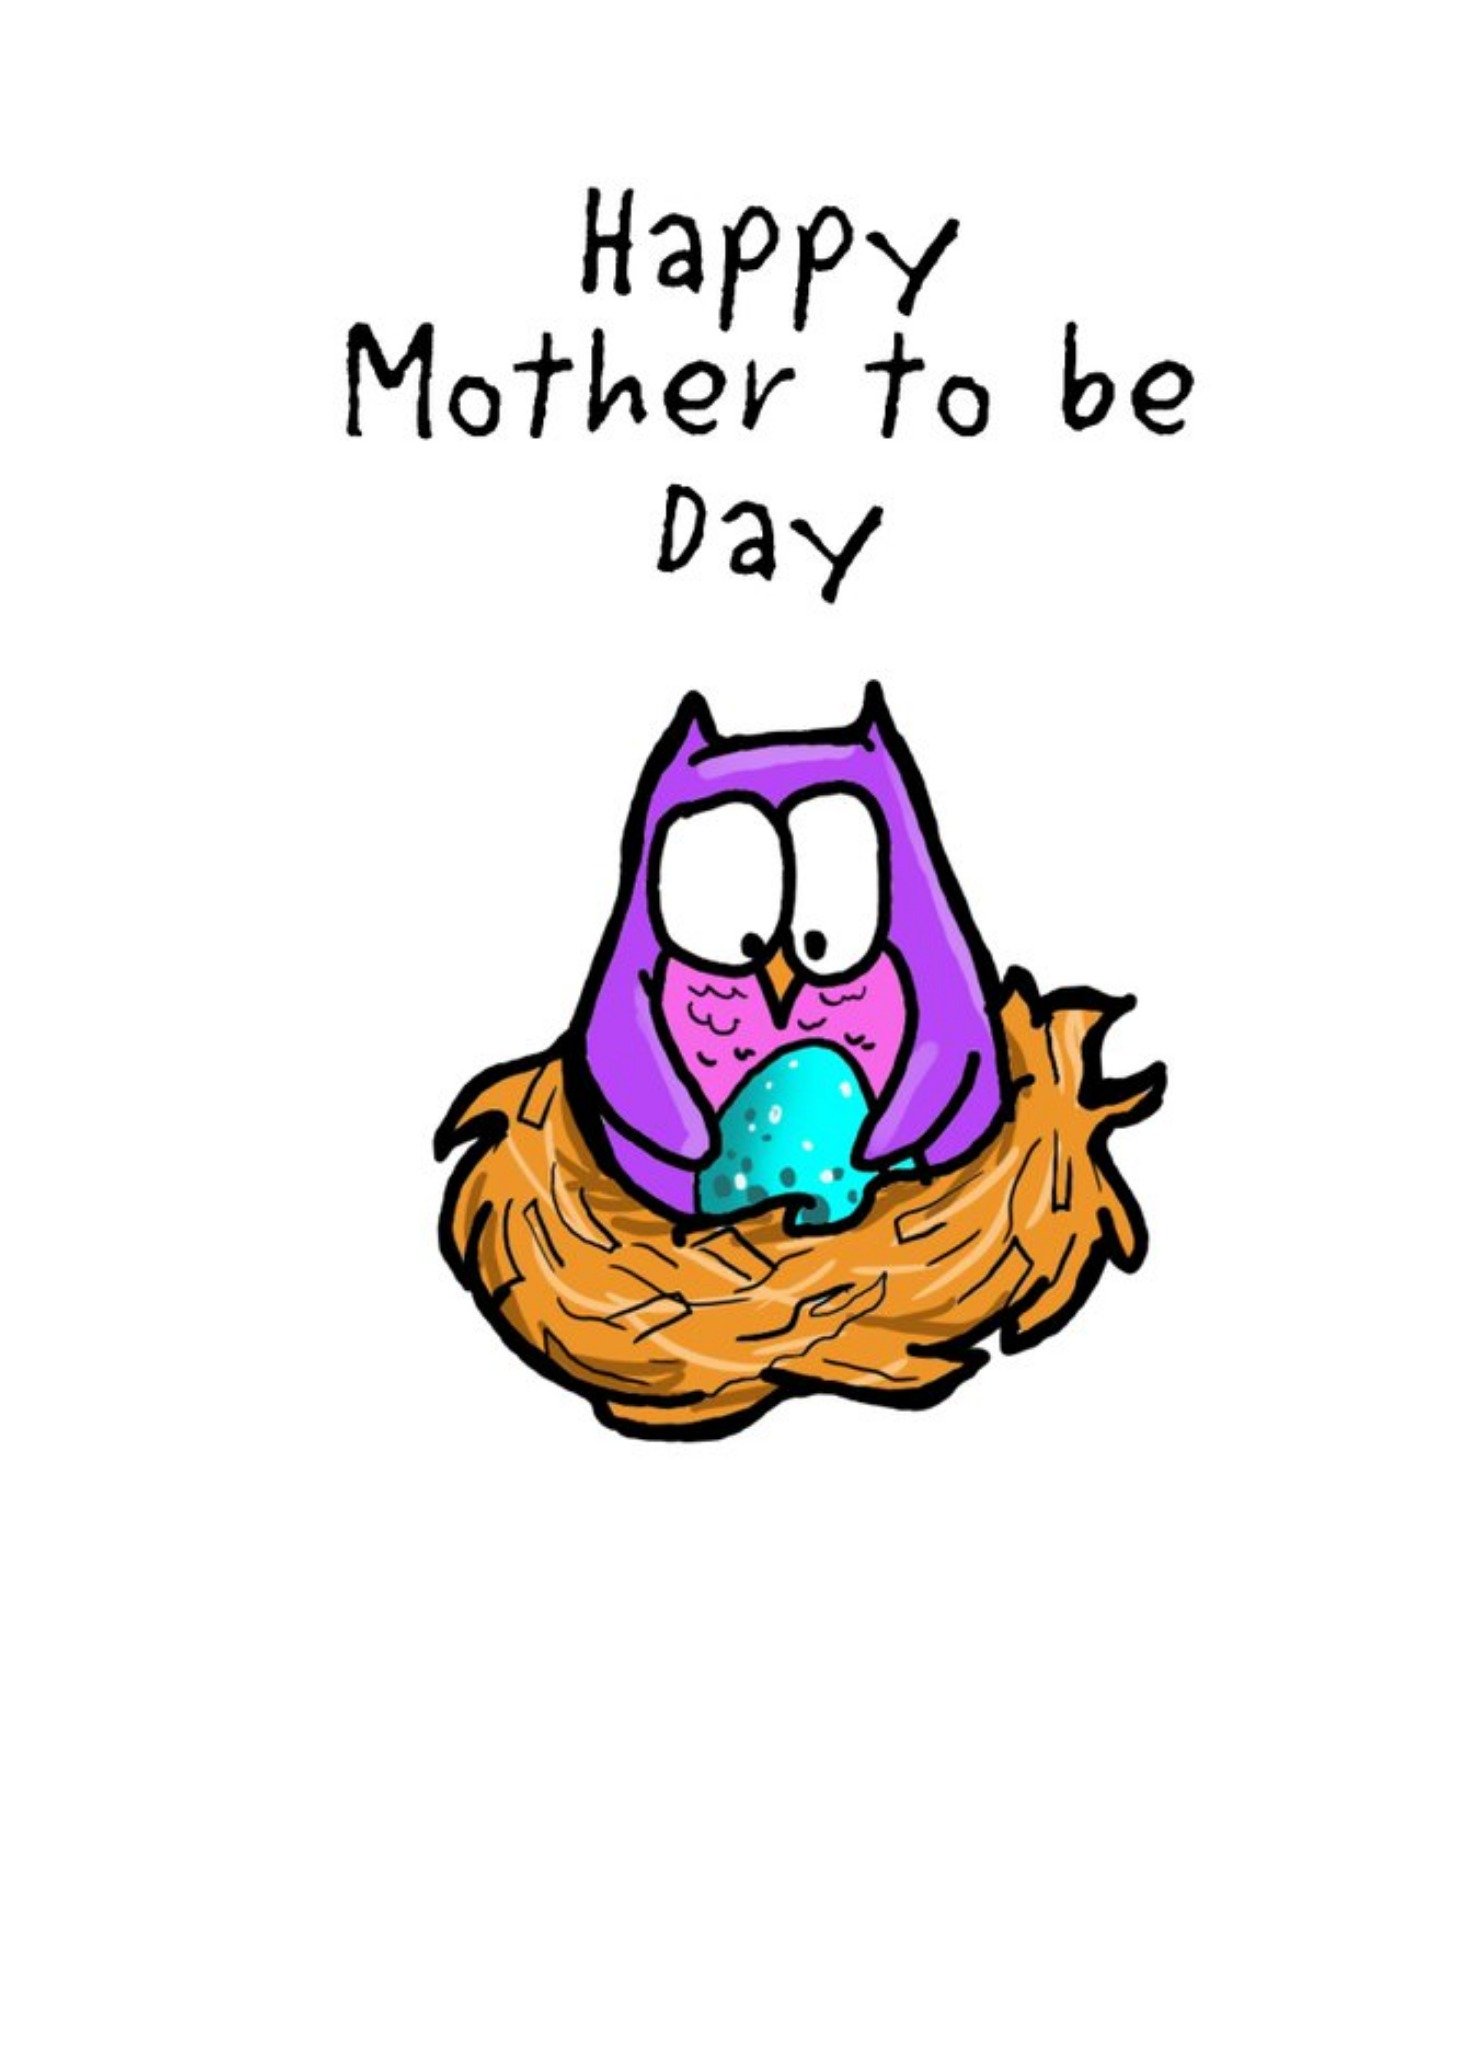 Moonpig Karen Flanart Pregnancy Mother's Day Funny Cute Card Ecard